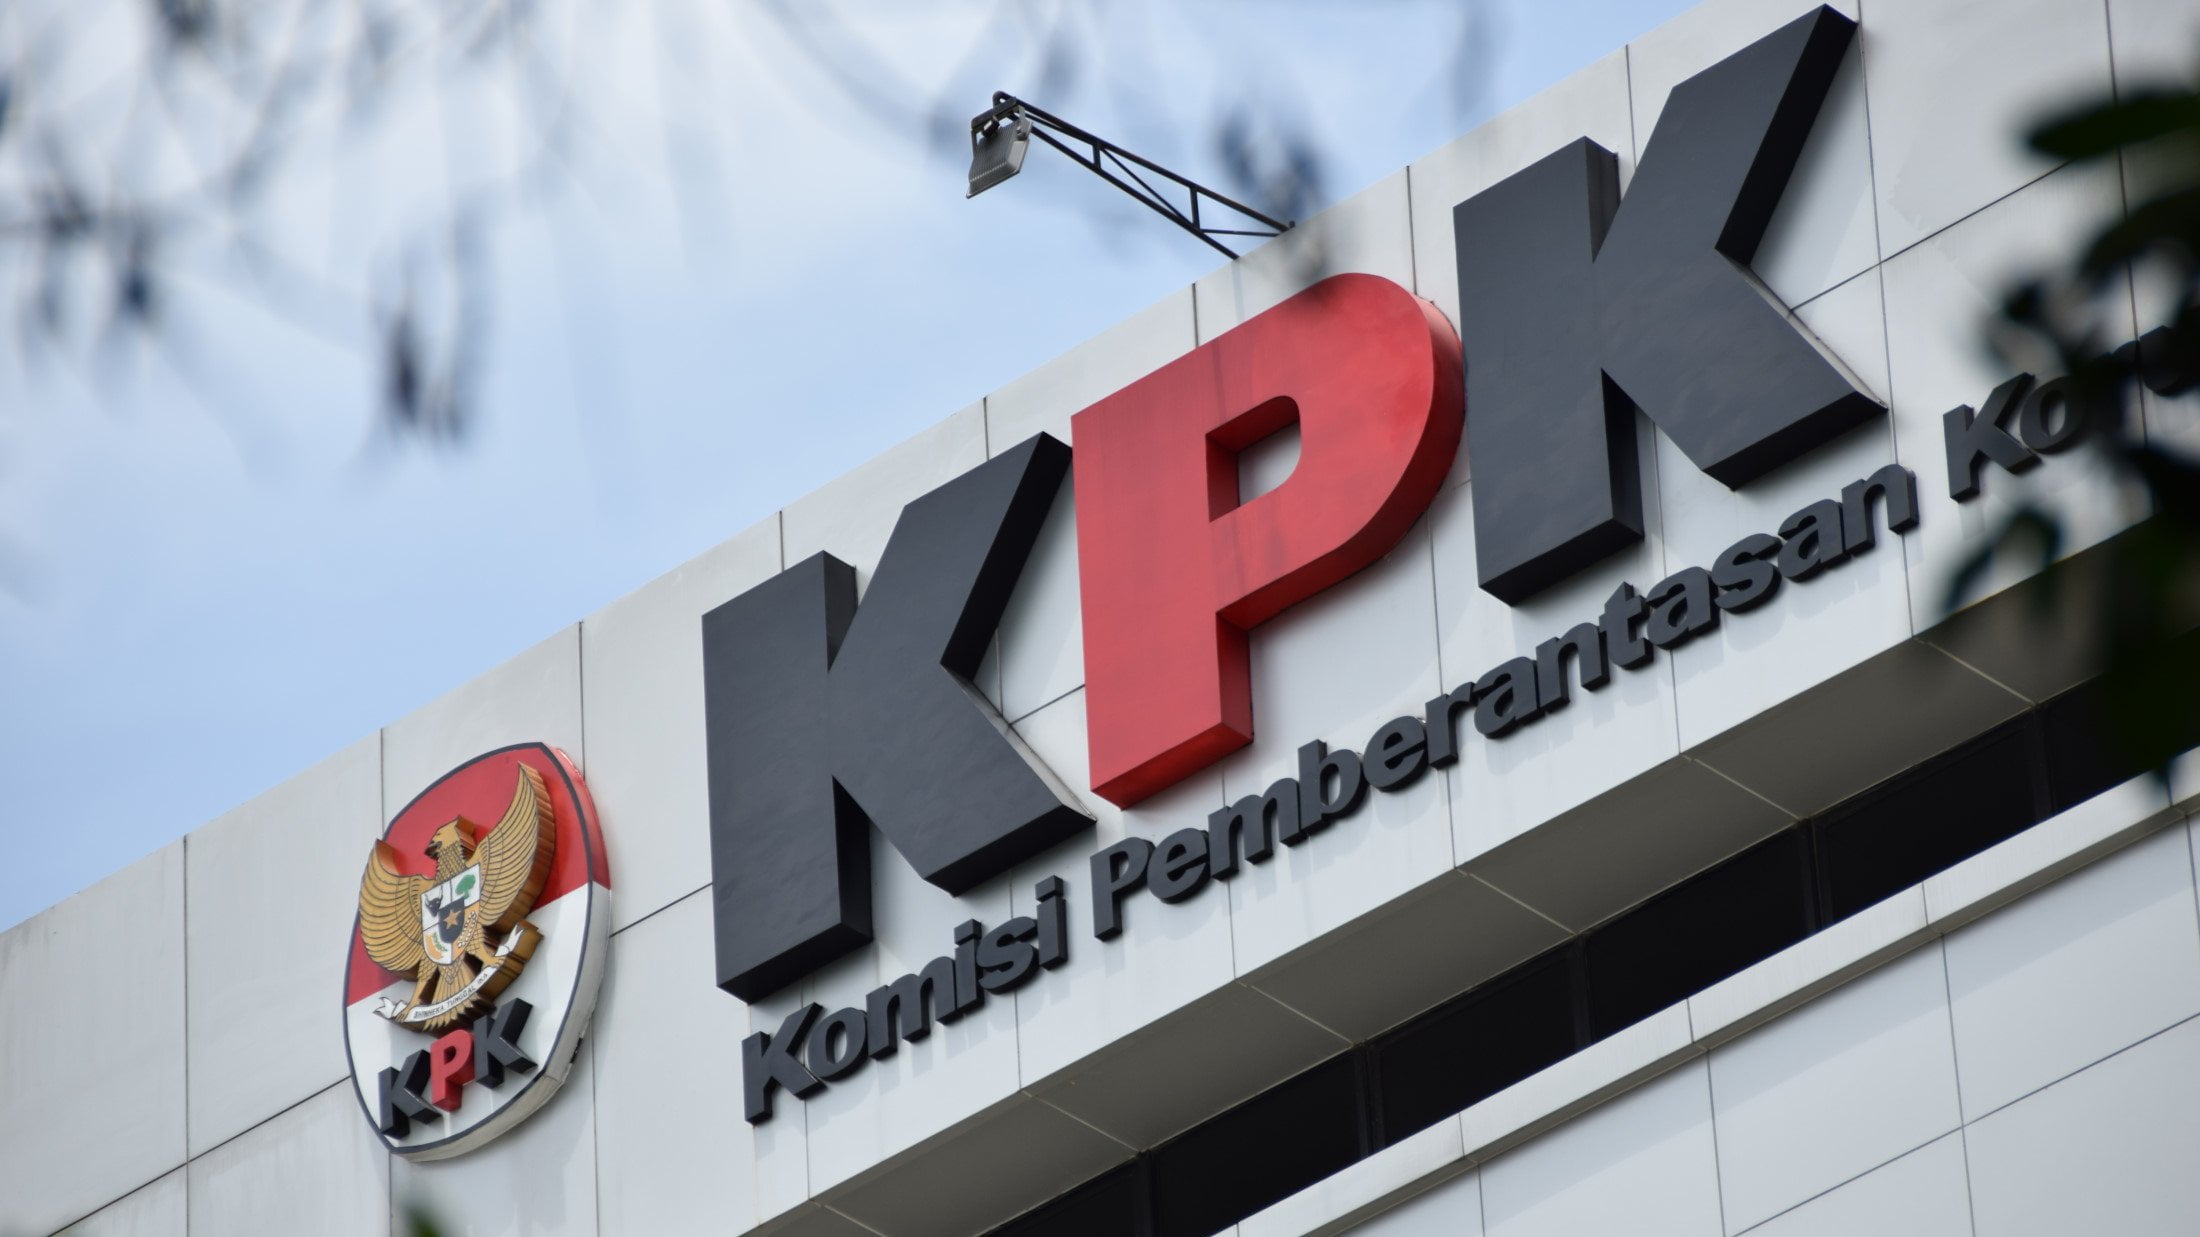 KPK tangkap 15 pegawai atas dugaan pemerasan di rutan KPK